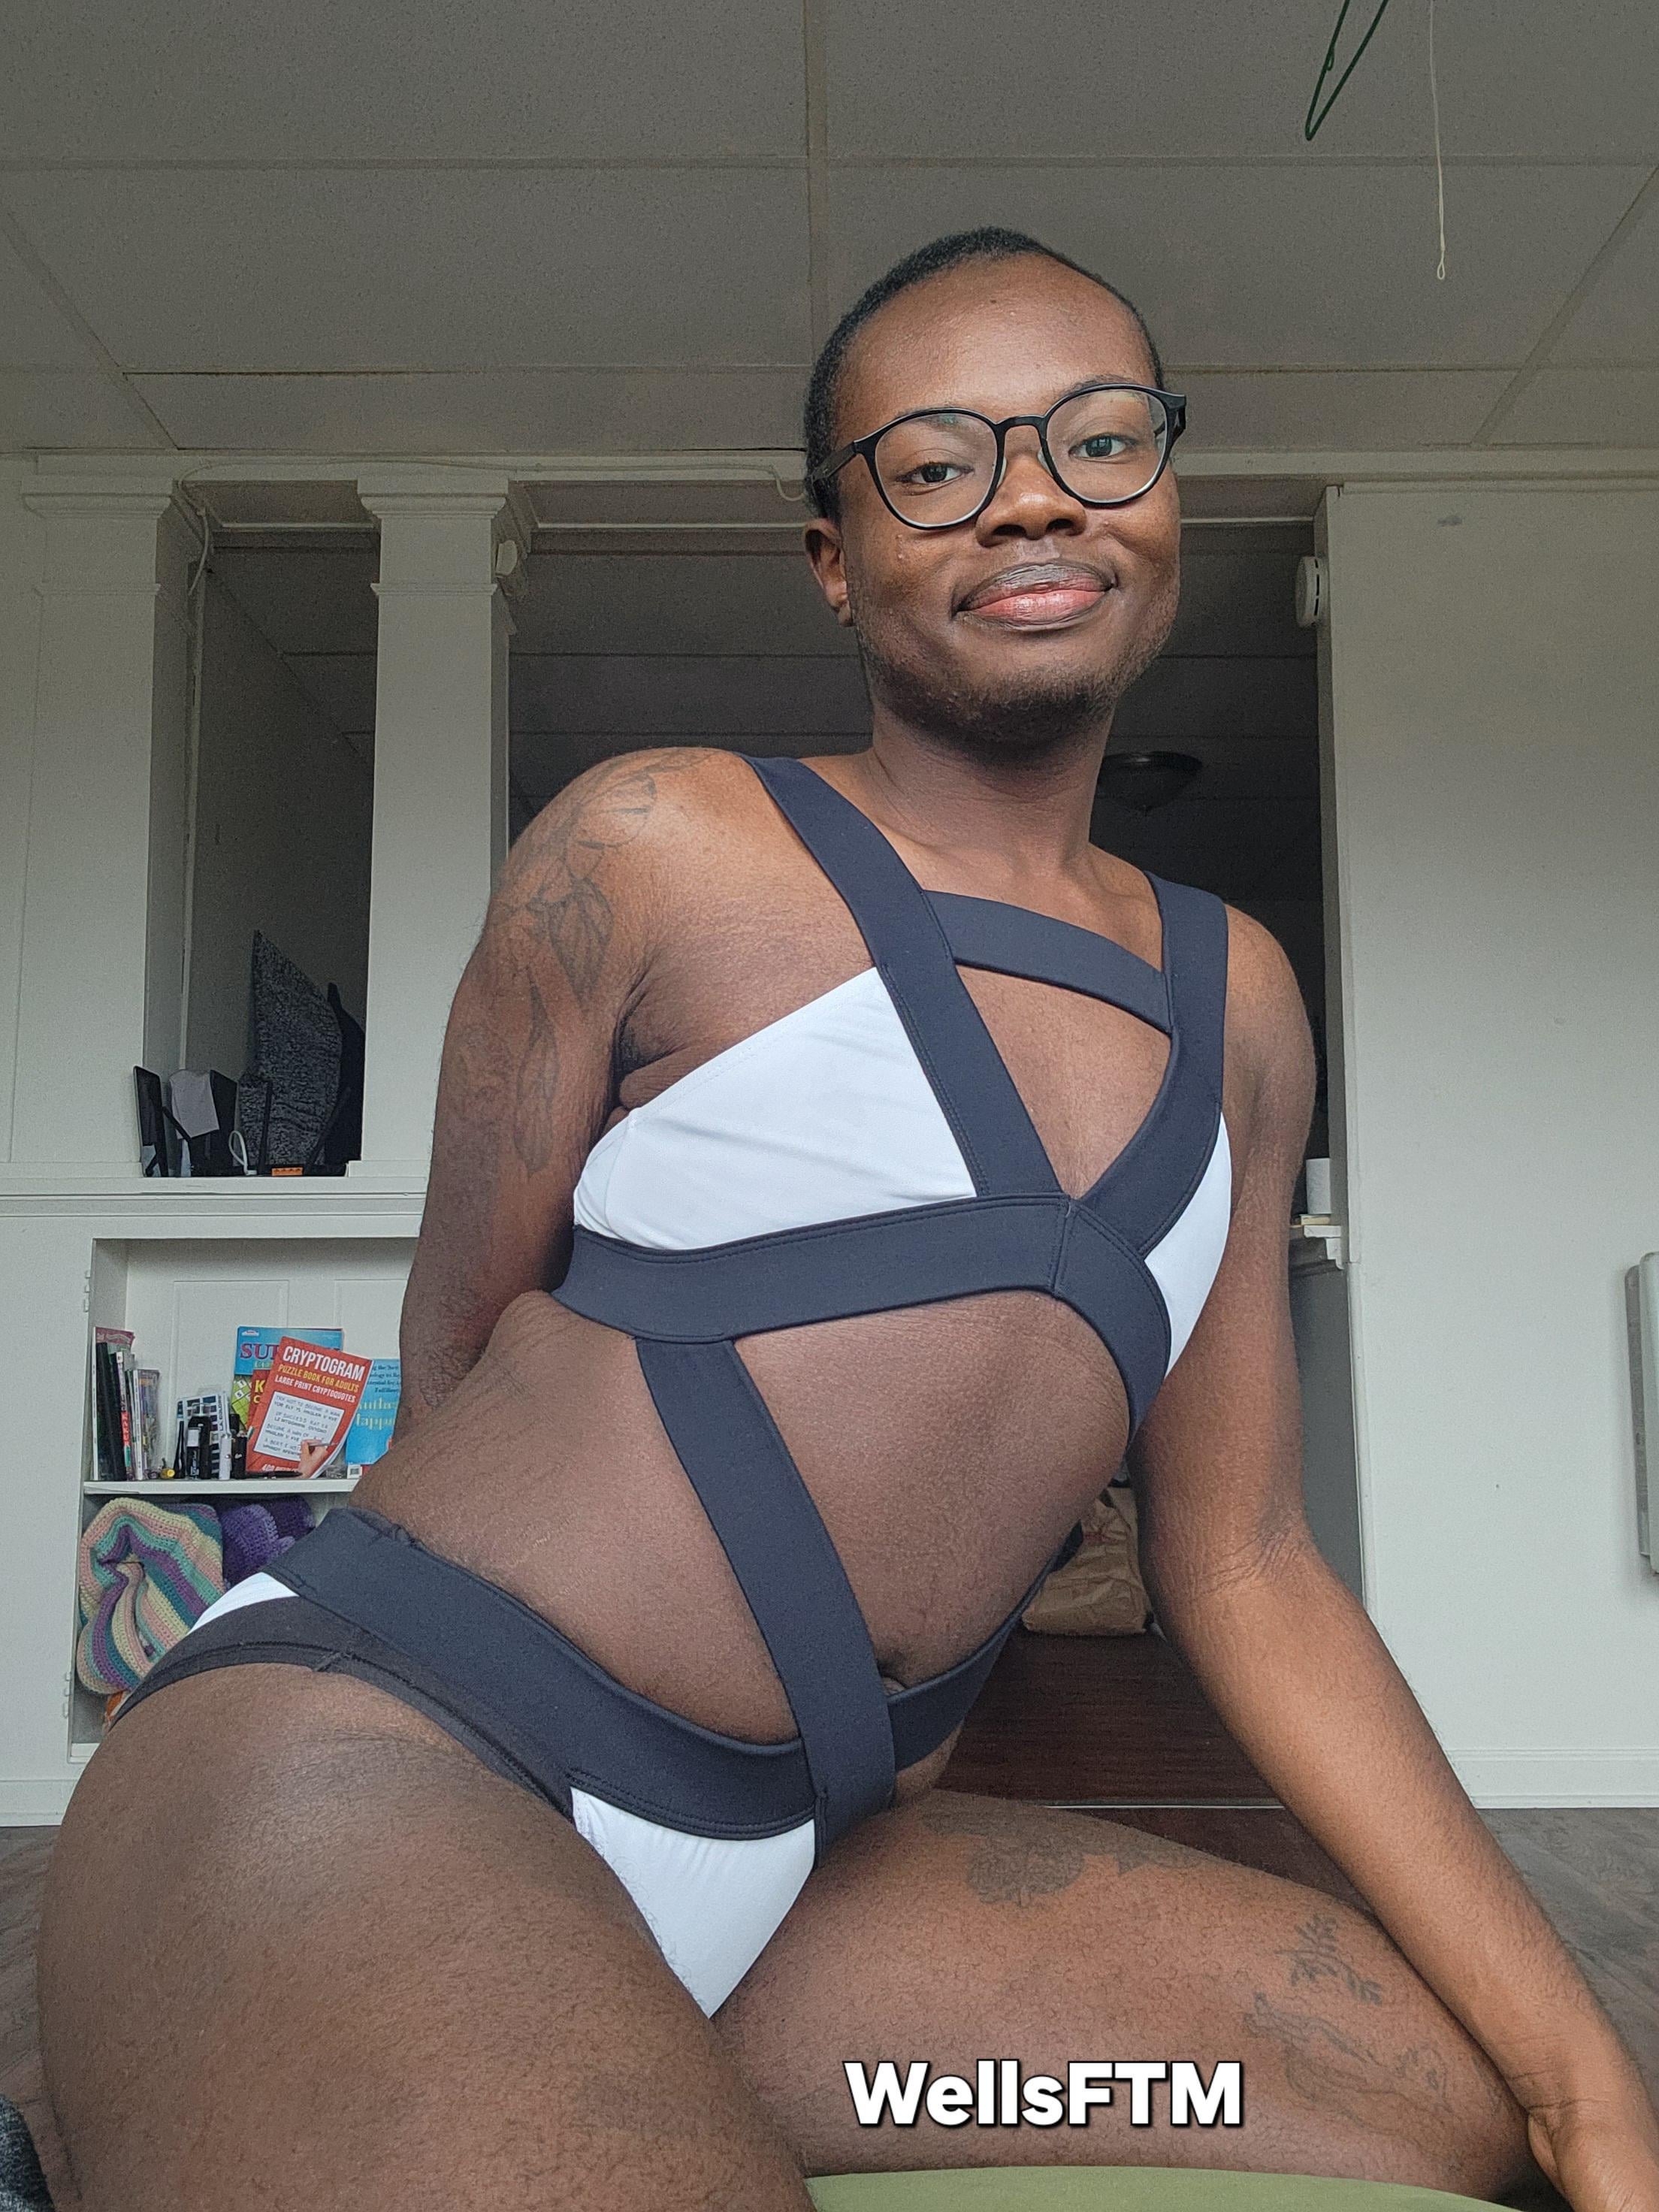 I love how this swimsuit looks like bondage gear